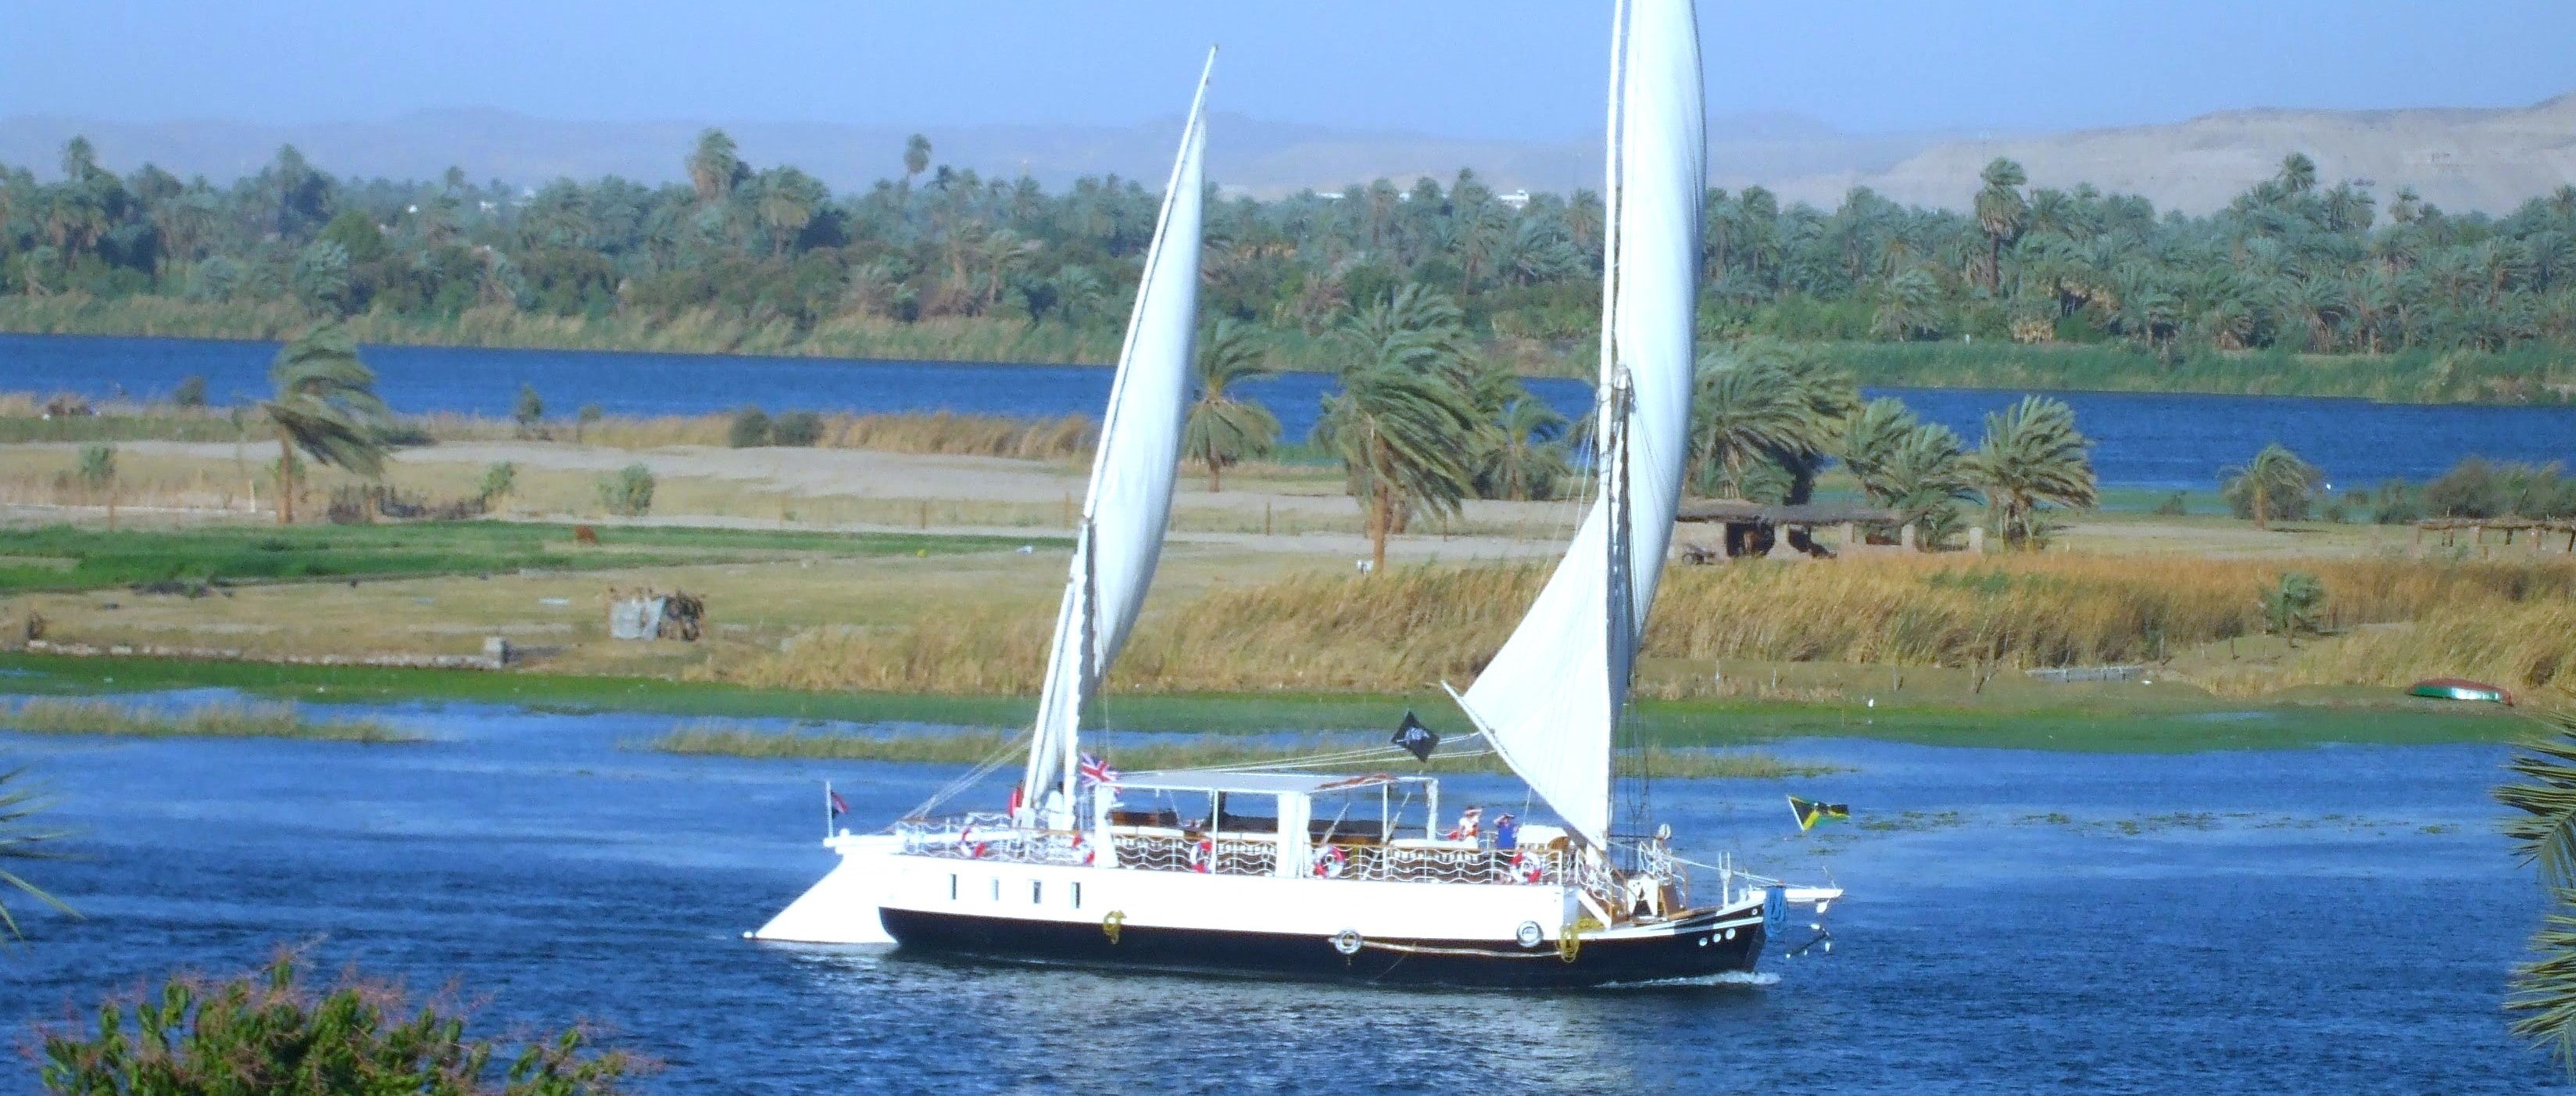 Load video: Nile Cruises and Sailing holidays